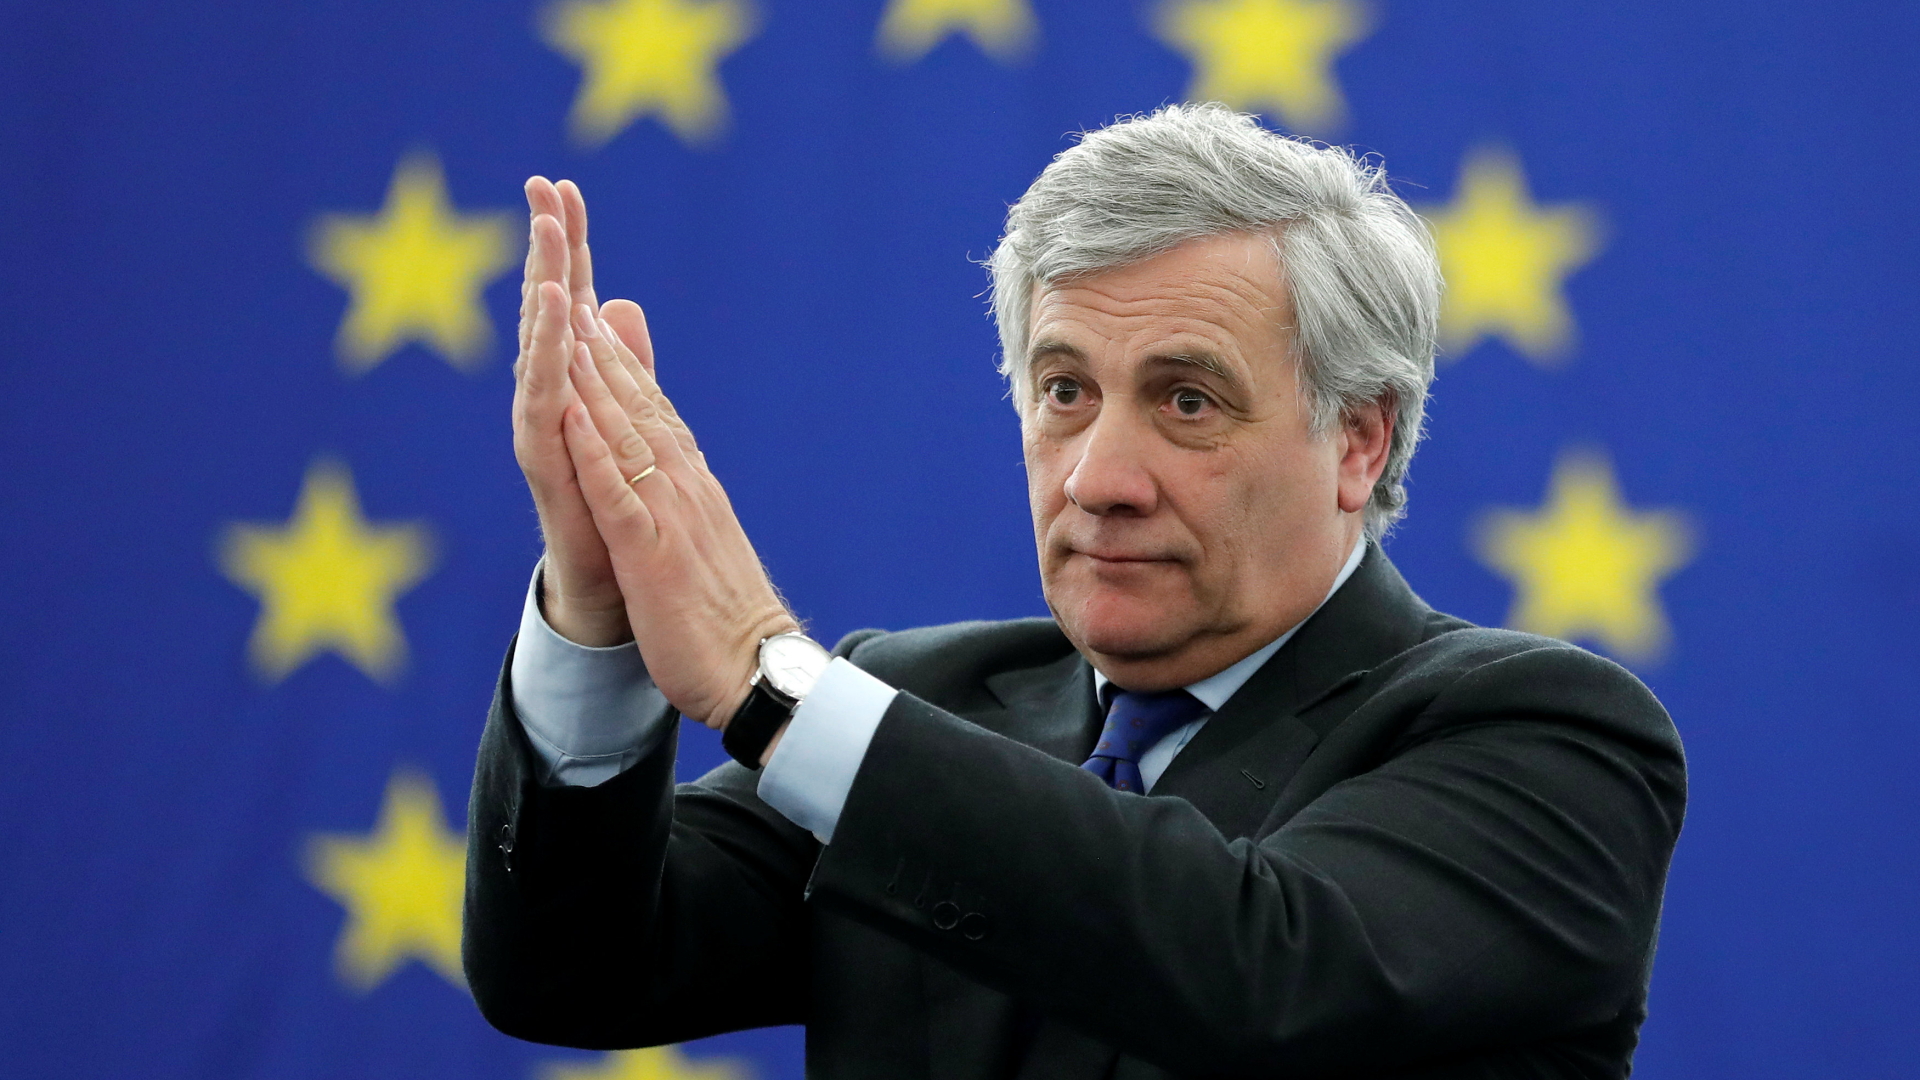 Antonio Tajani ist neuer EU-Parlamentspräsident